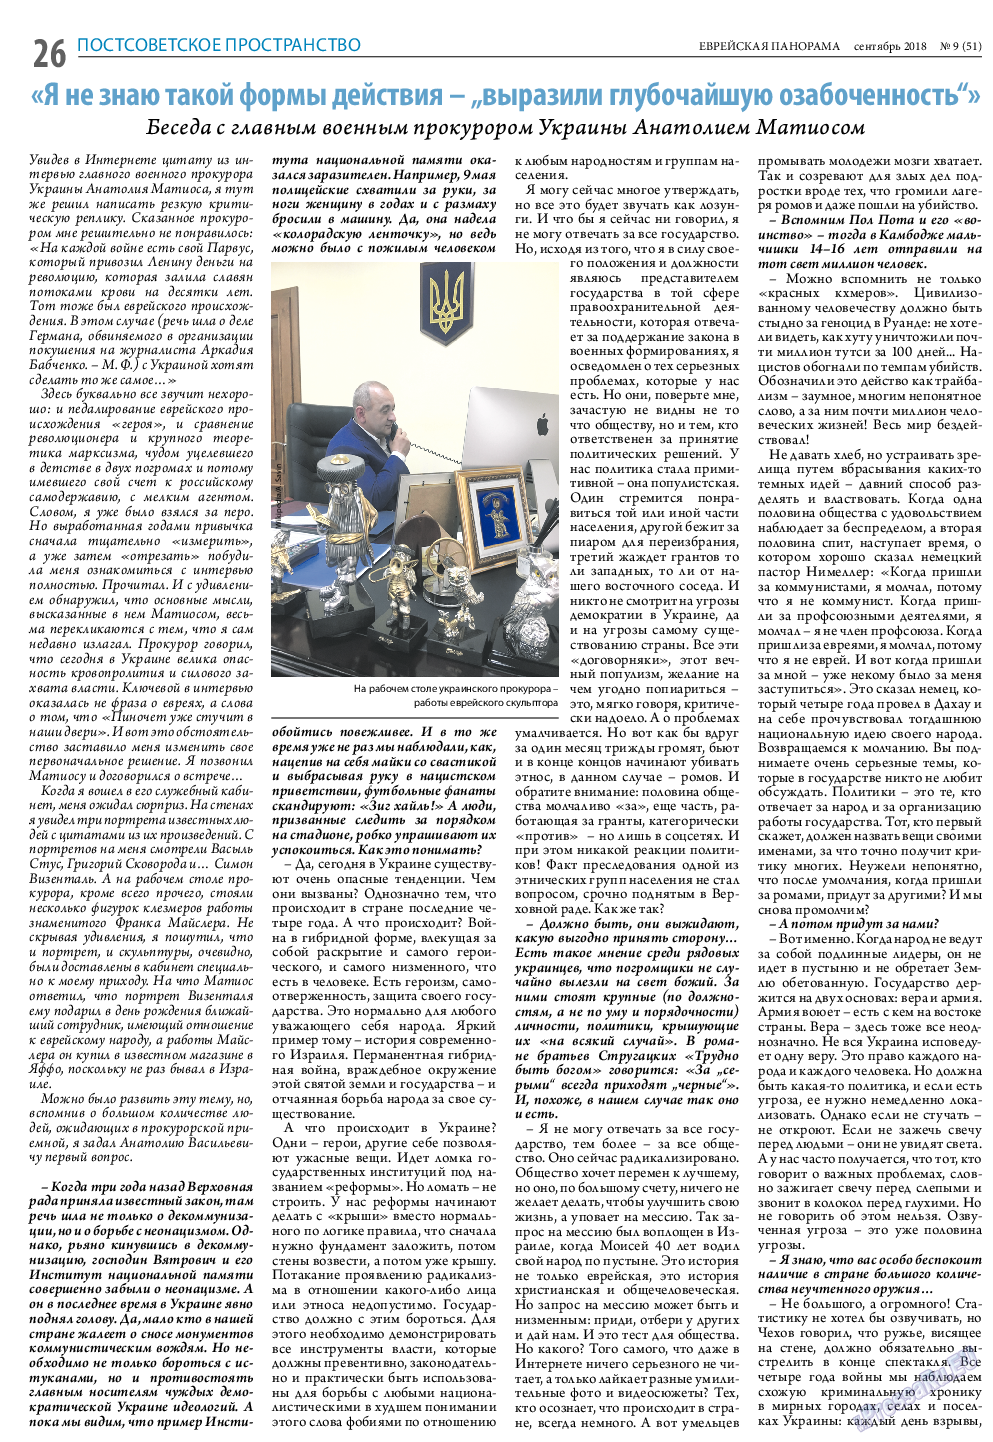 Еврейская панорама, газета. 2018 №9 стр.26